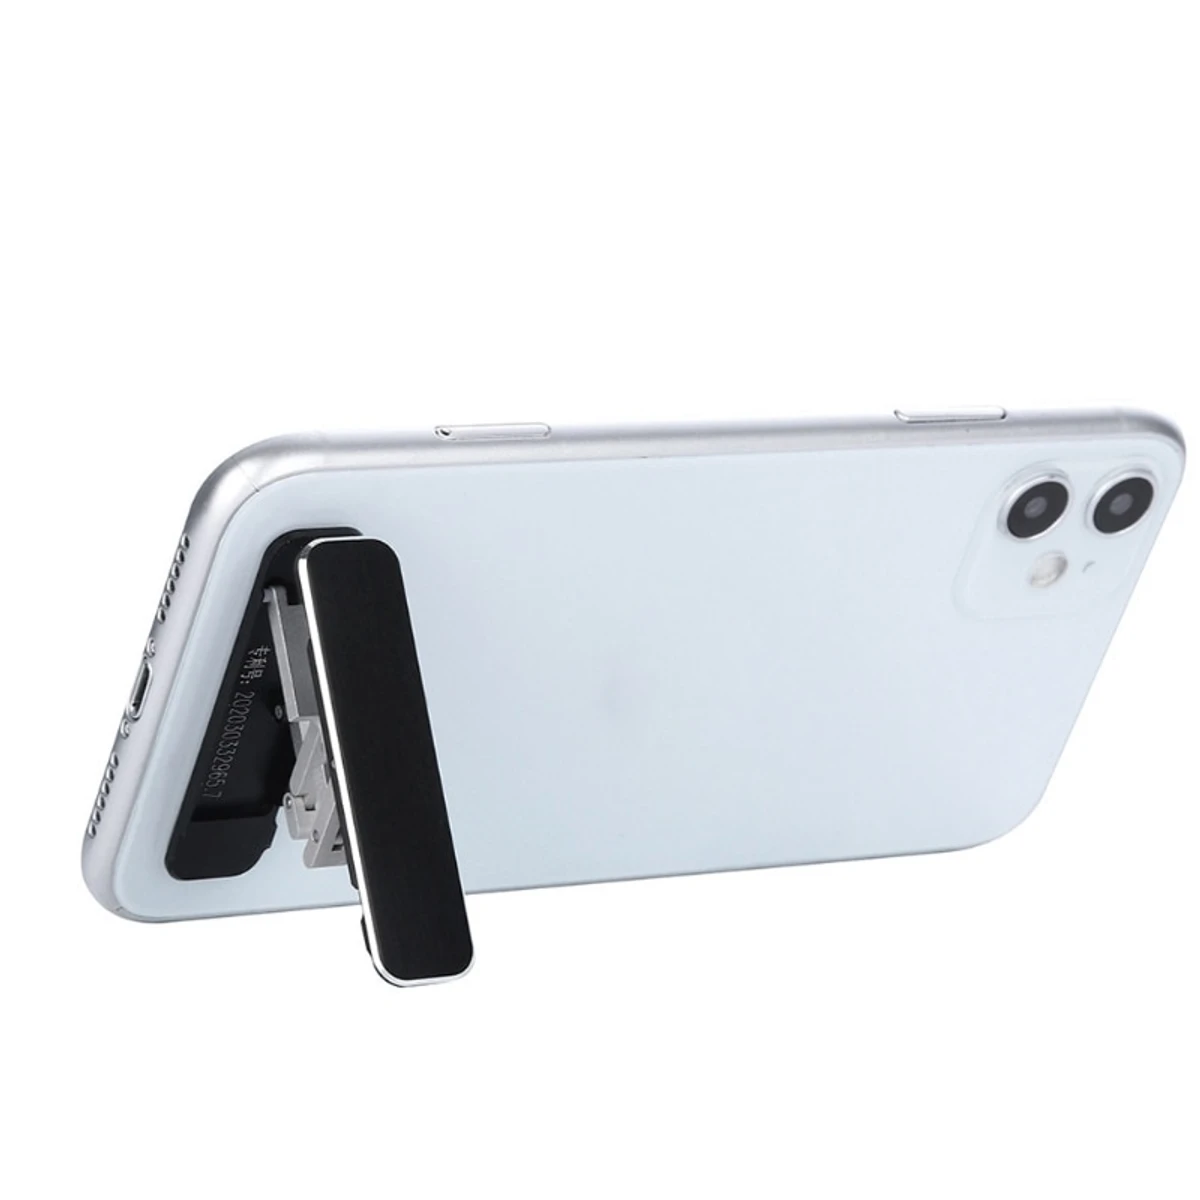 Mini Size Portable Folding Desk Mount Mobile Phone Stand _Metal